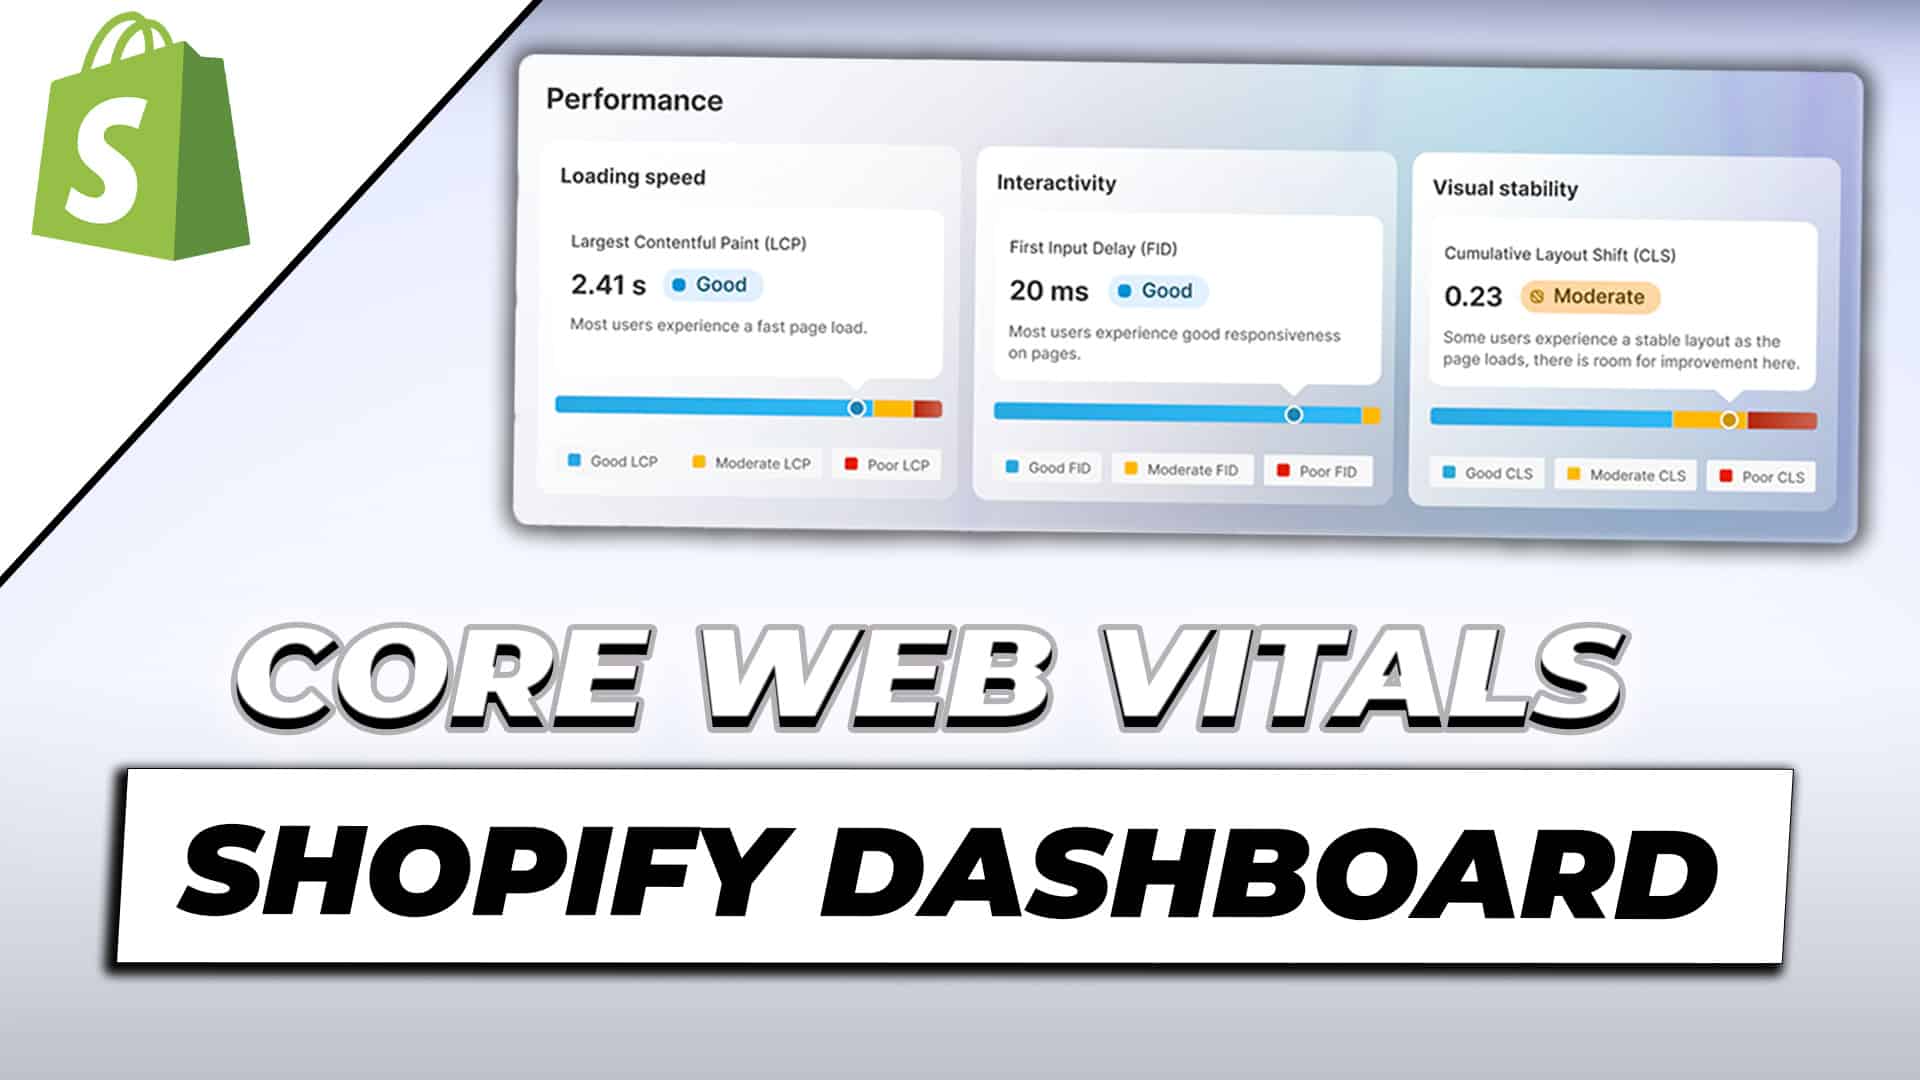 Shopify Web-Performance-Dashboard